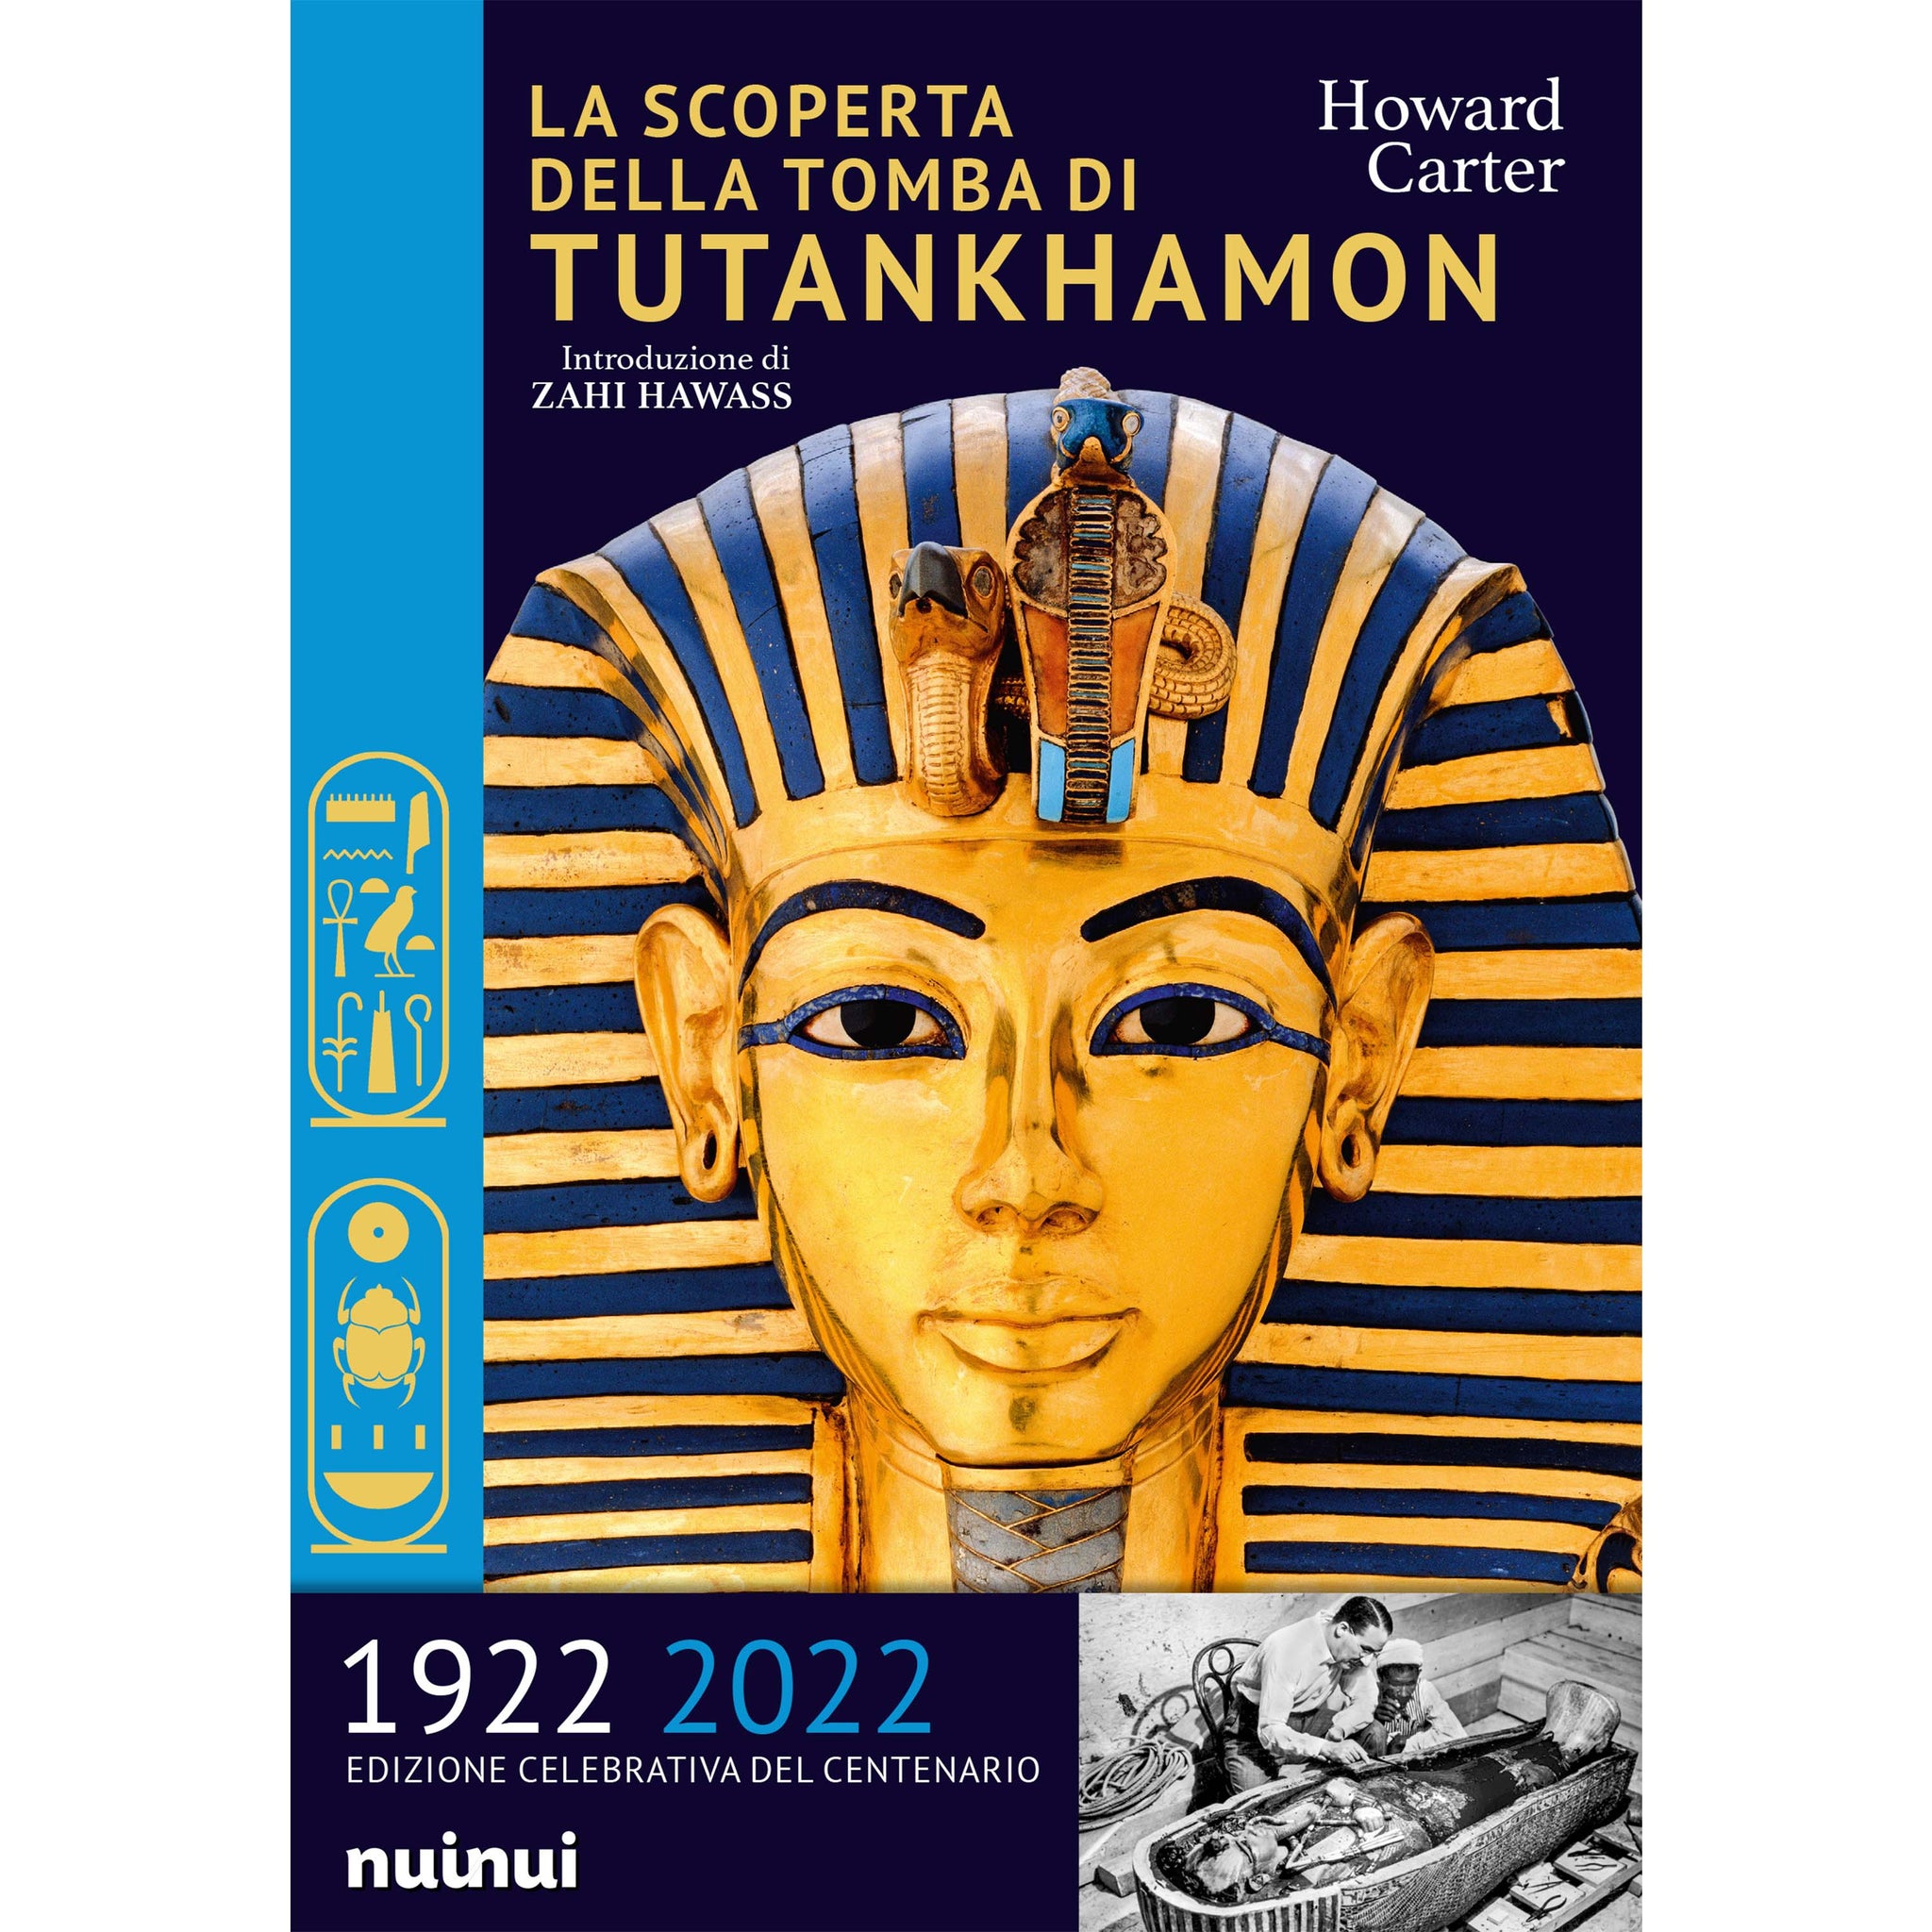 The discovery of Tutankhamun's tomb